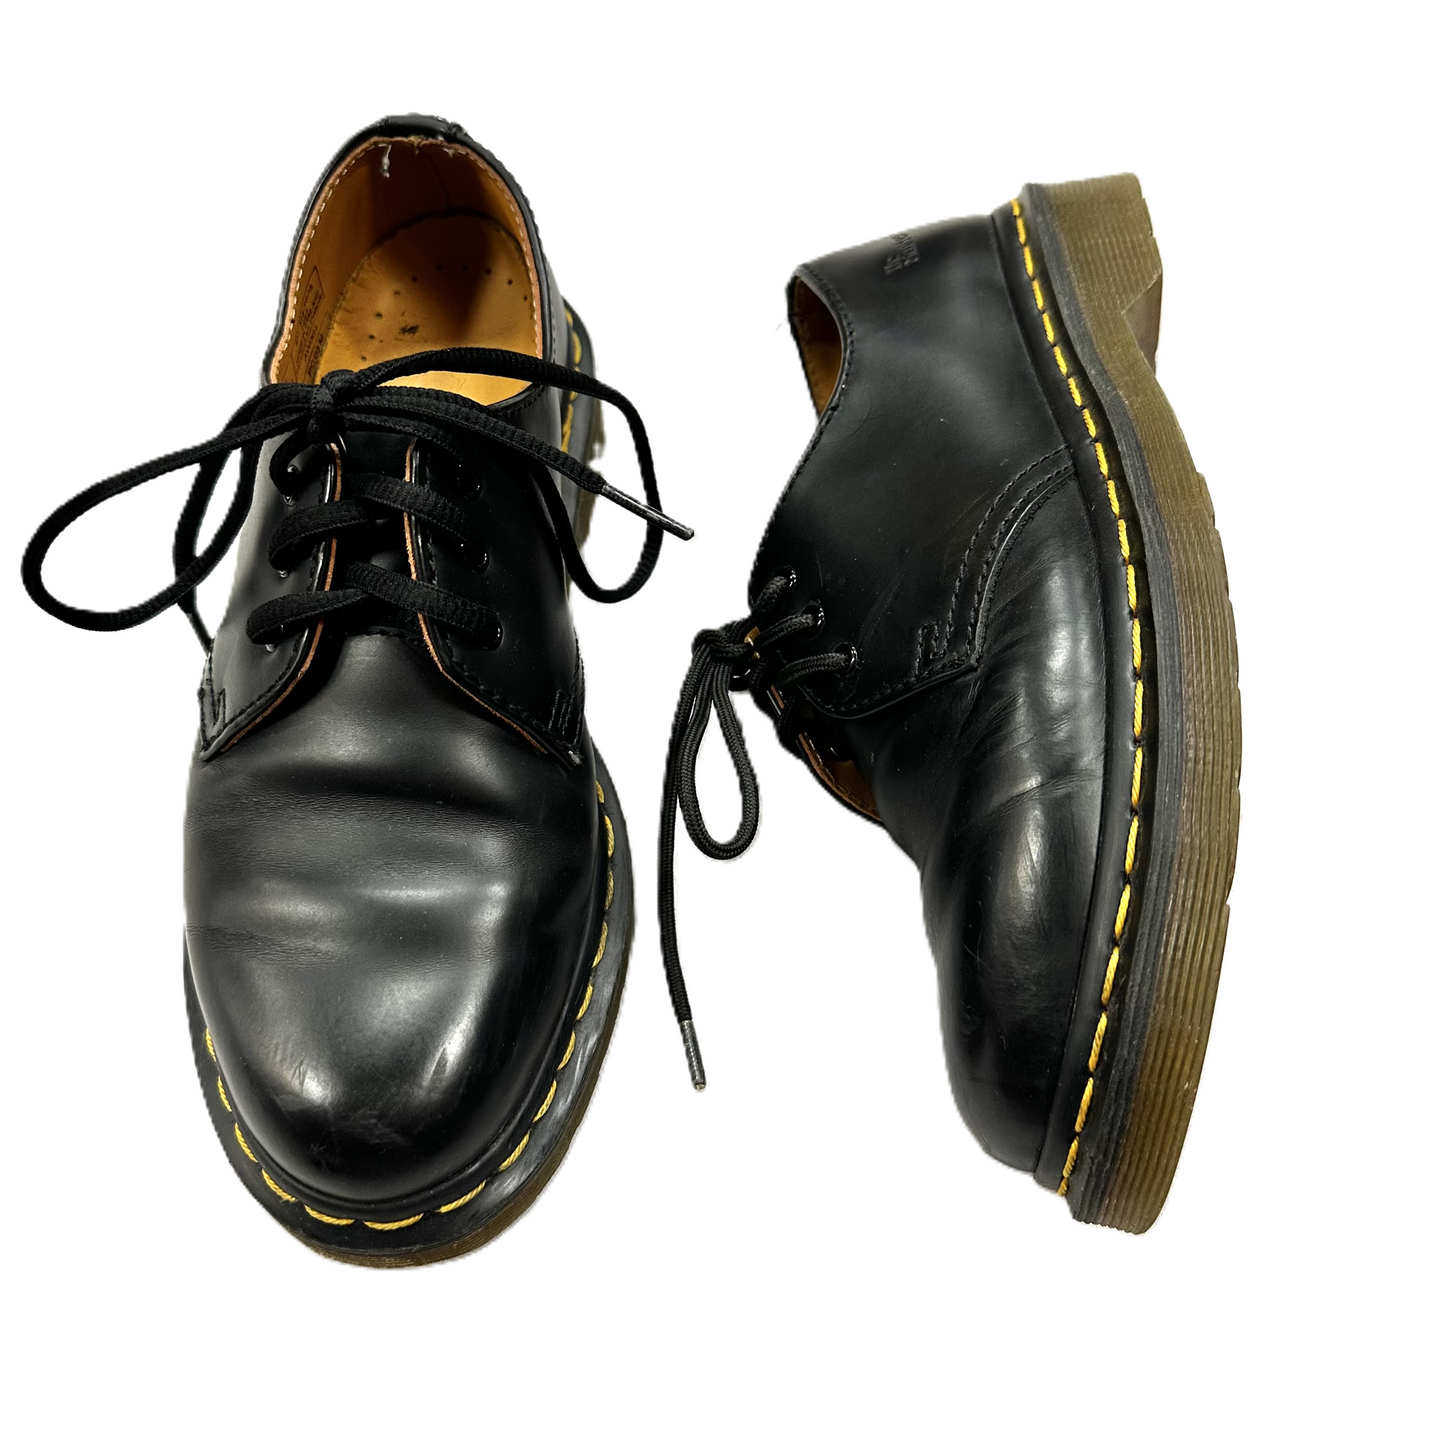 Black Shoes Flats By Dr Martens, Size: 6.5